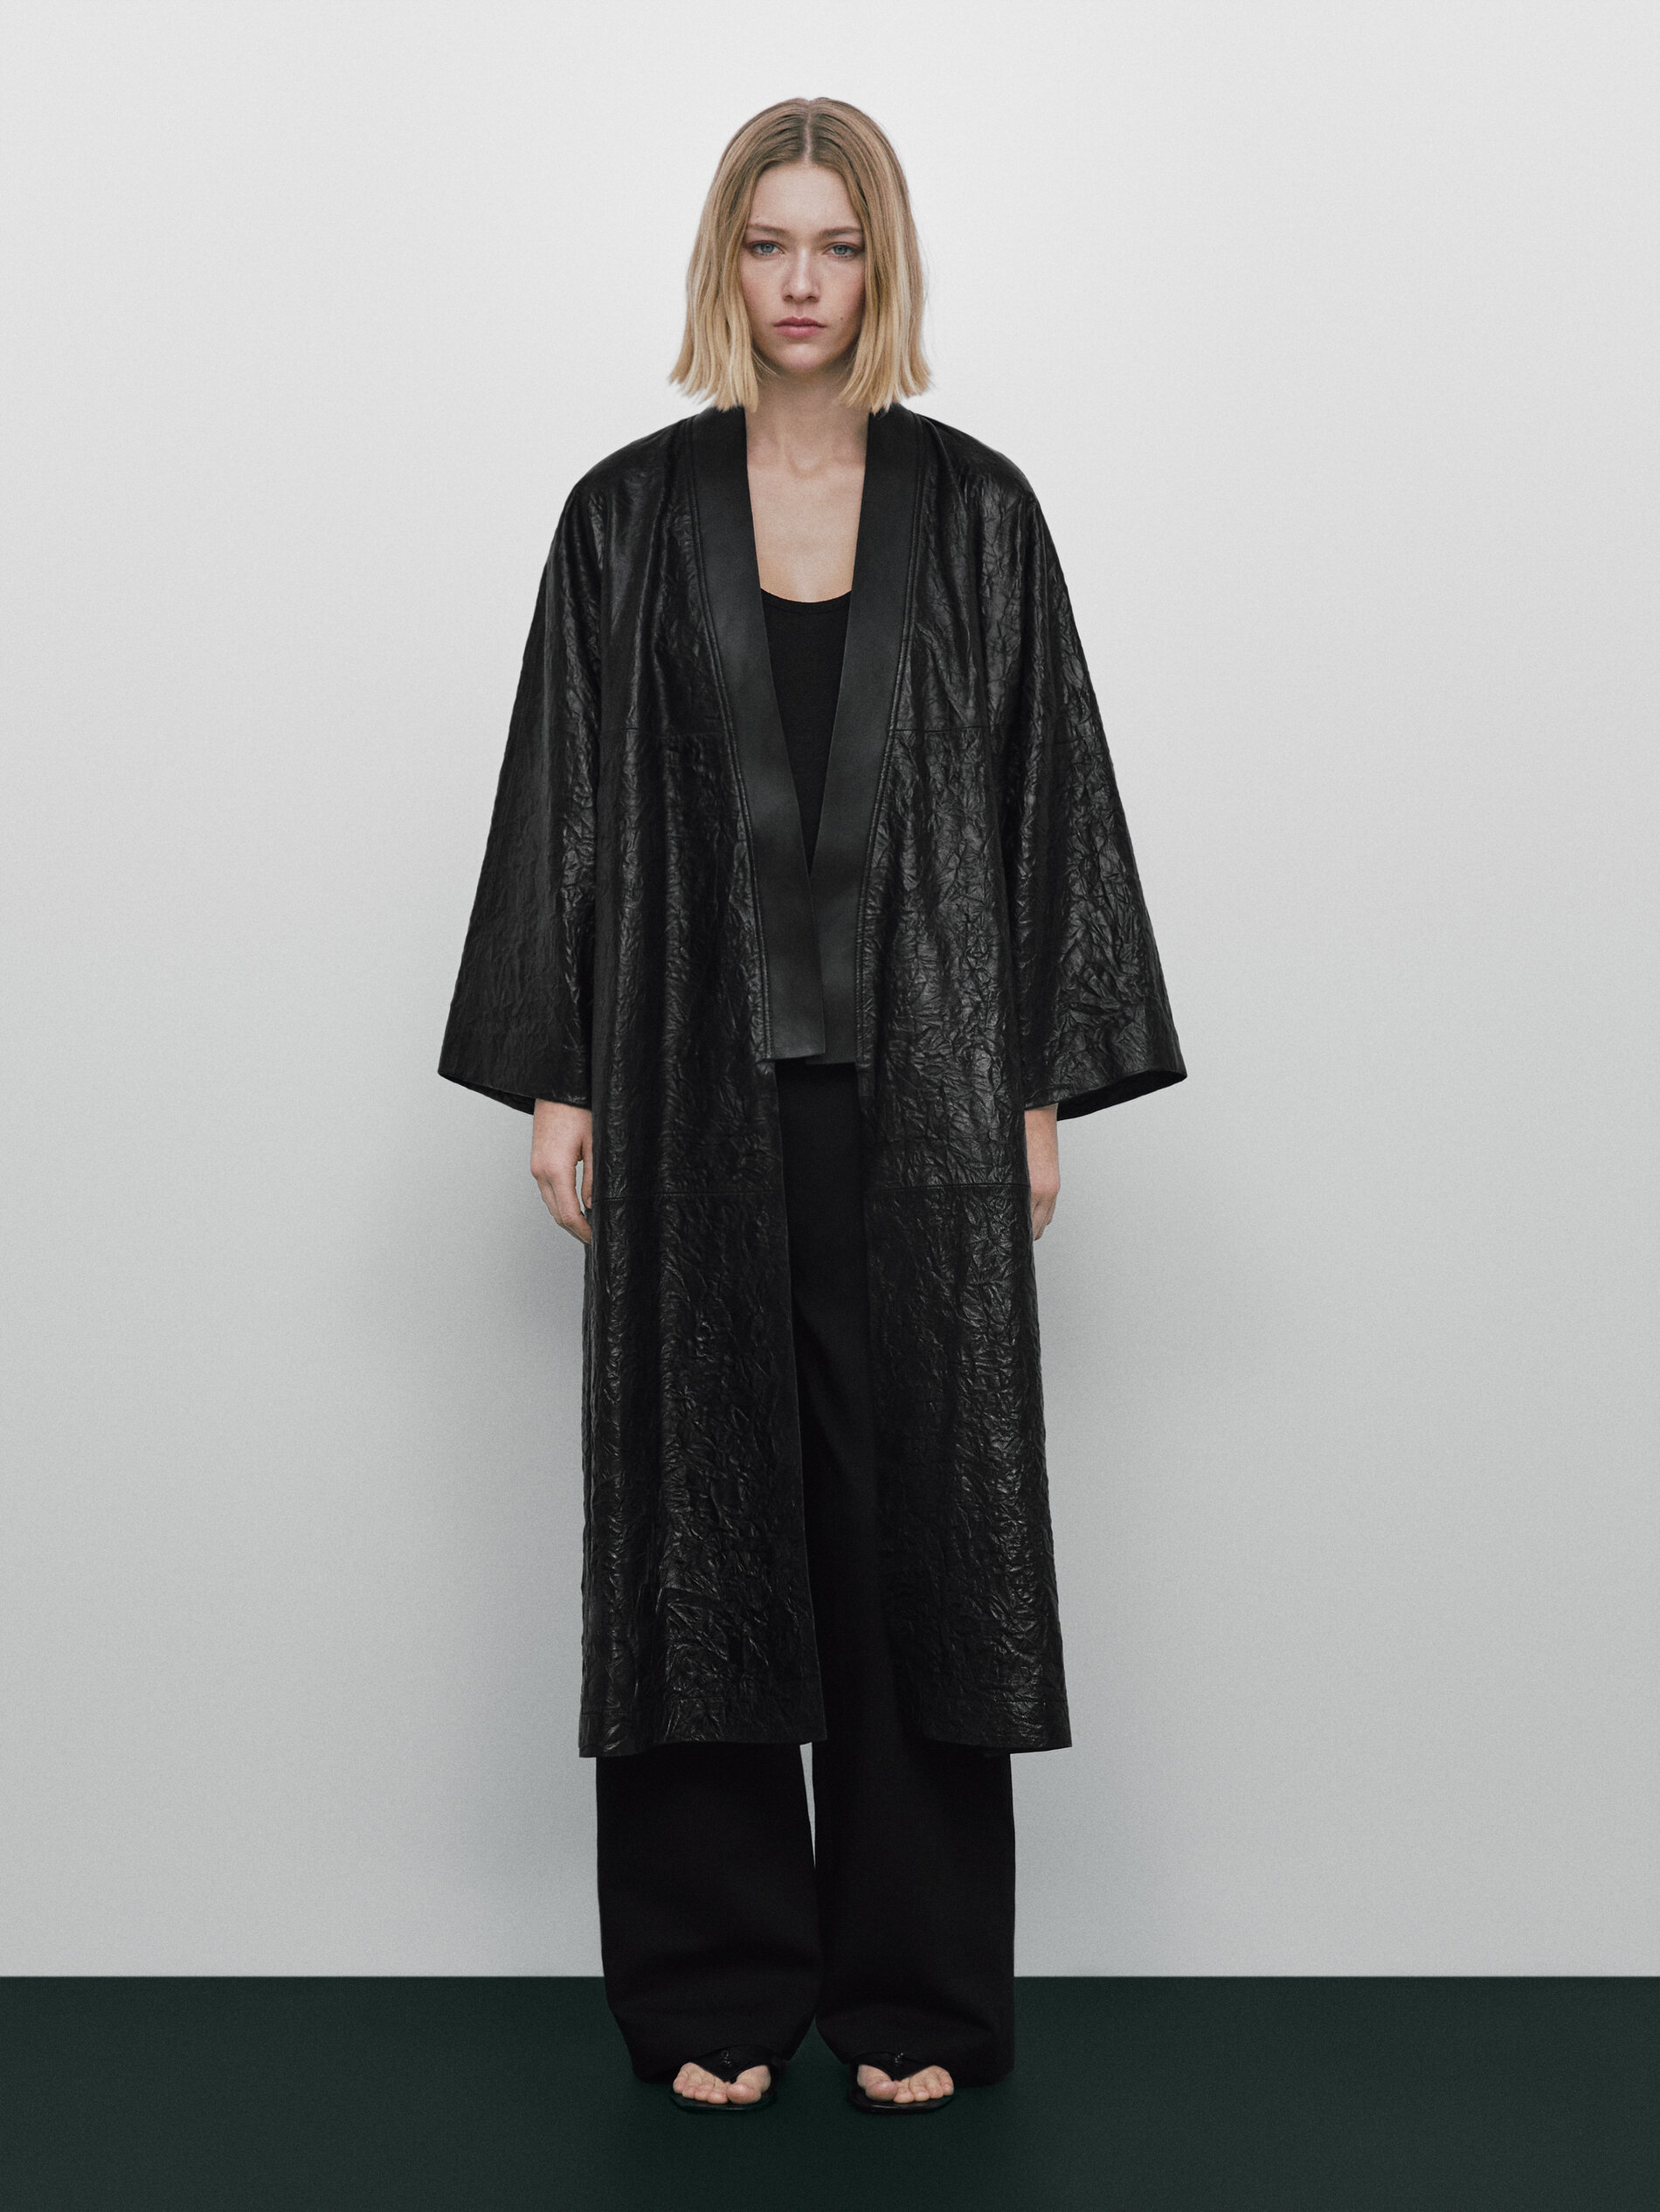 Massimo Dutti Crackled Nappa Leather Kimono- Limited Edition - Big ...